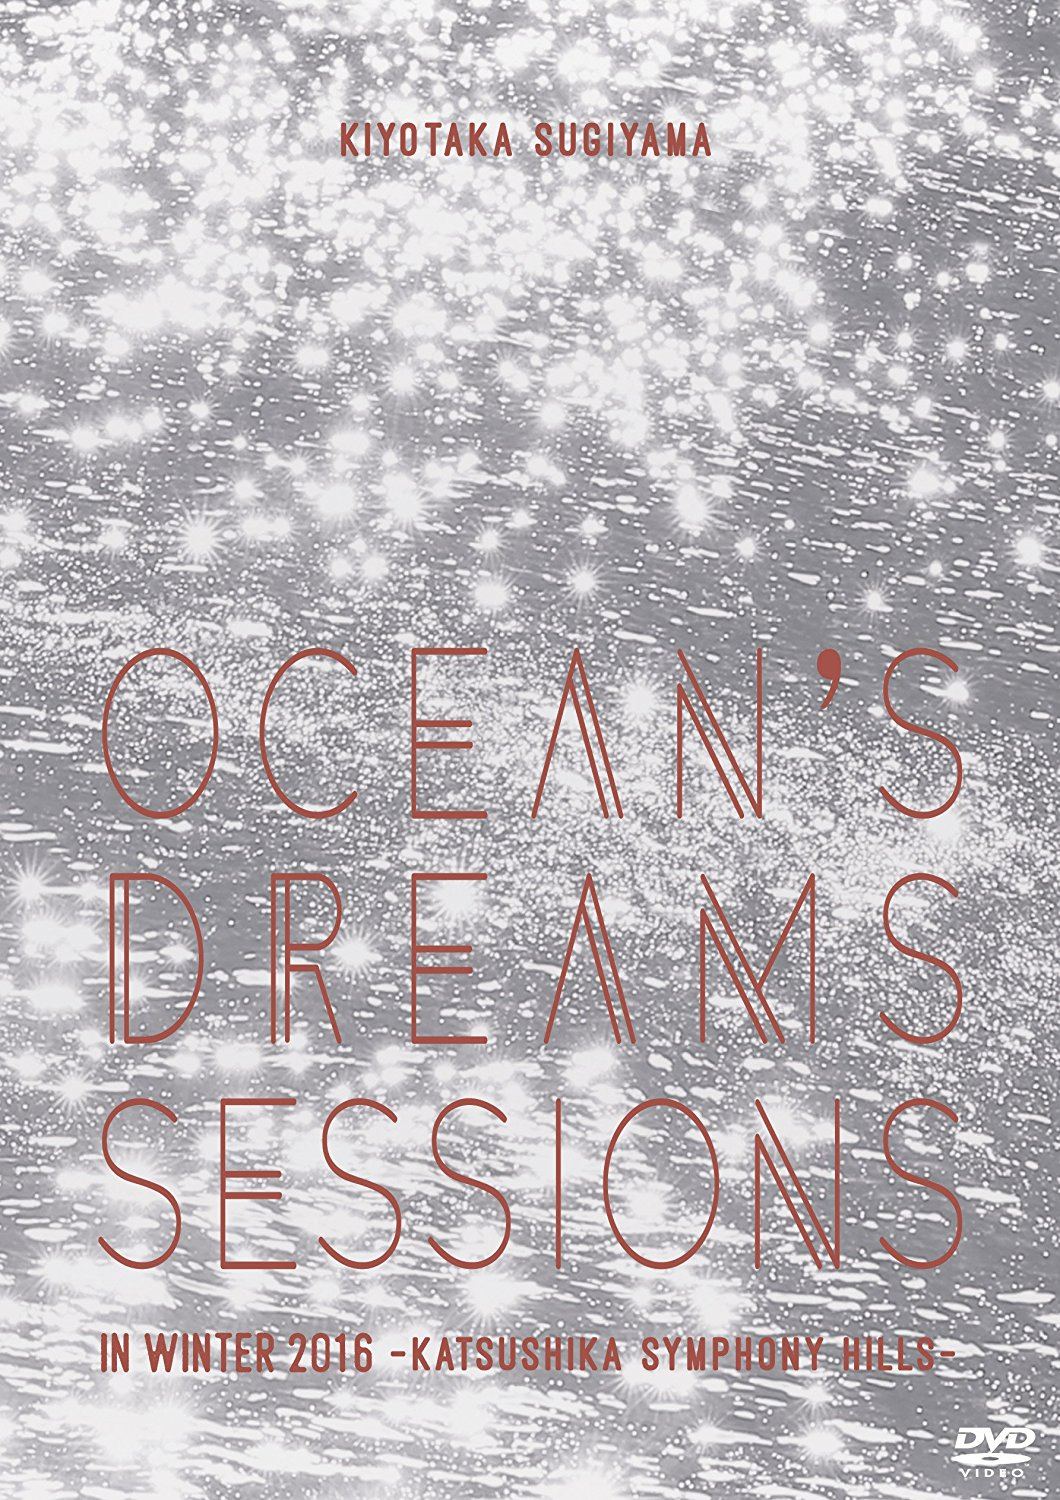 Ocean's dreams sessions~in winter 2016 【Blu-ray】